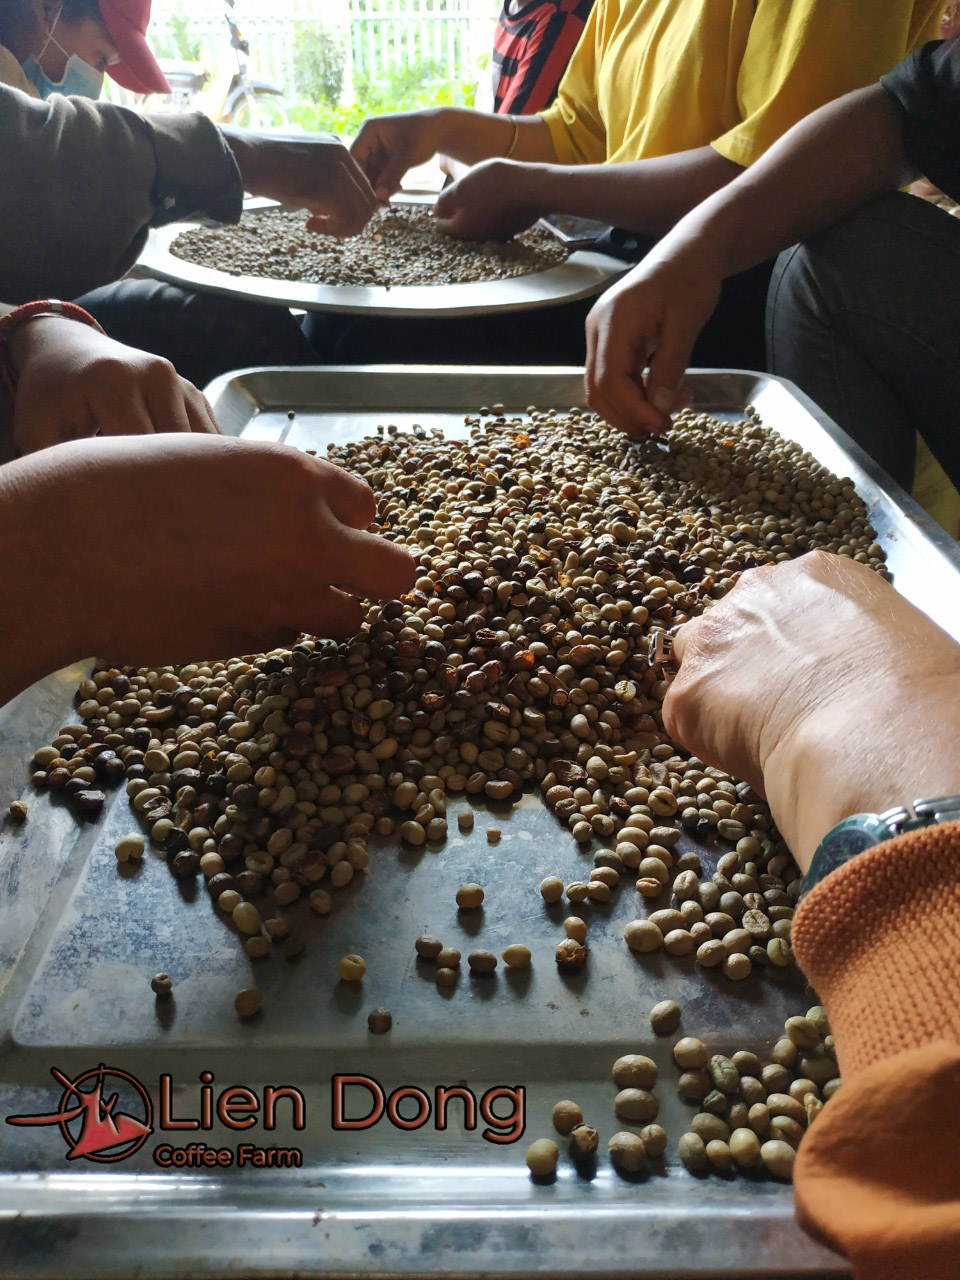 Lien Dong Coffee Farm